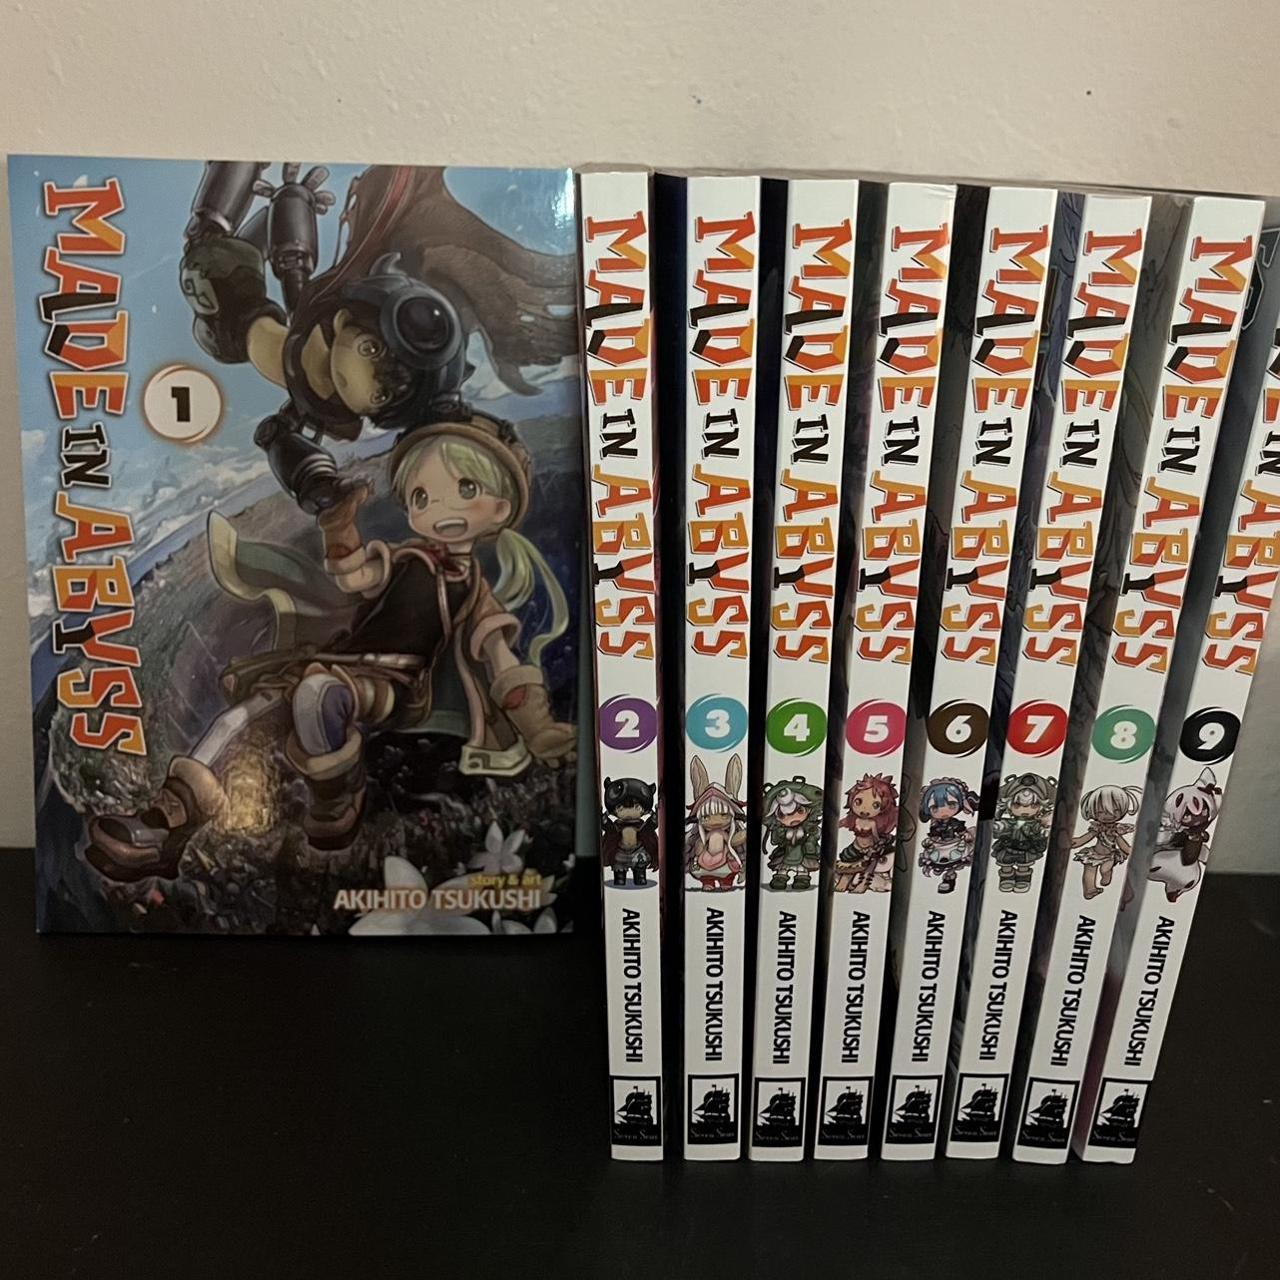 Made in Abyss Season 1 Manga Box Set